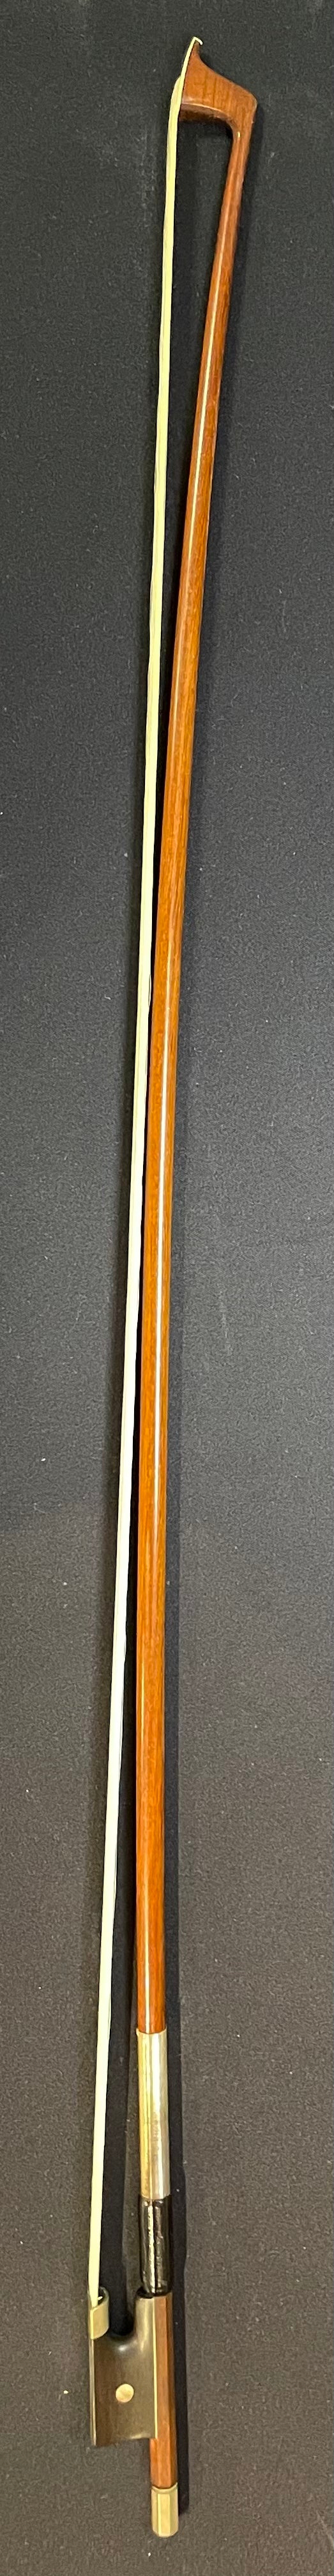 4/4 Violin Bow - F.H. Roth Wood Model